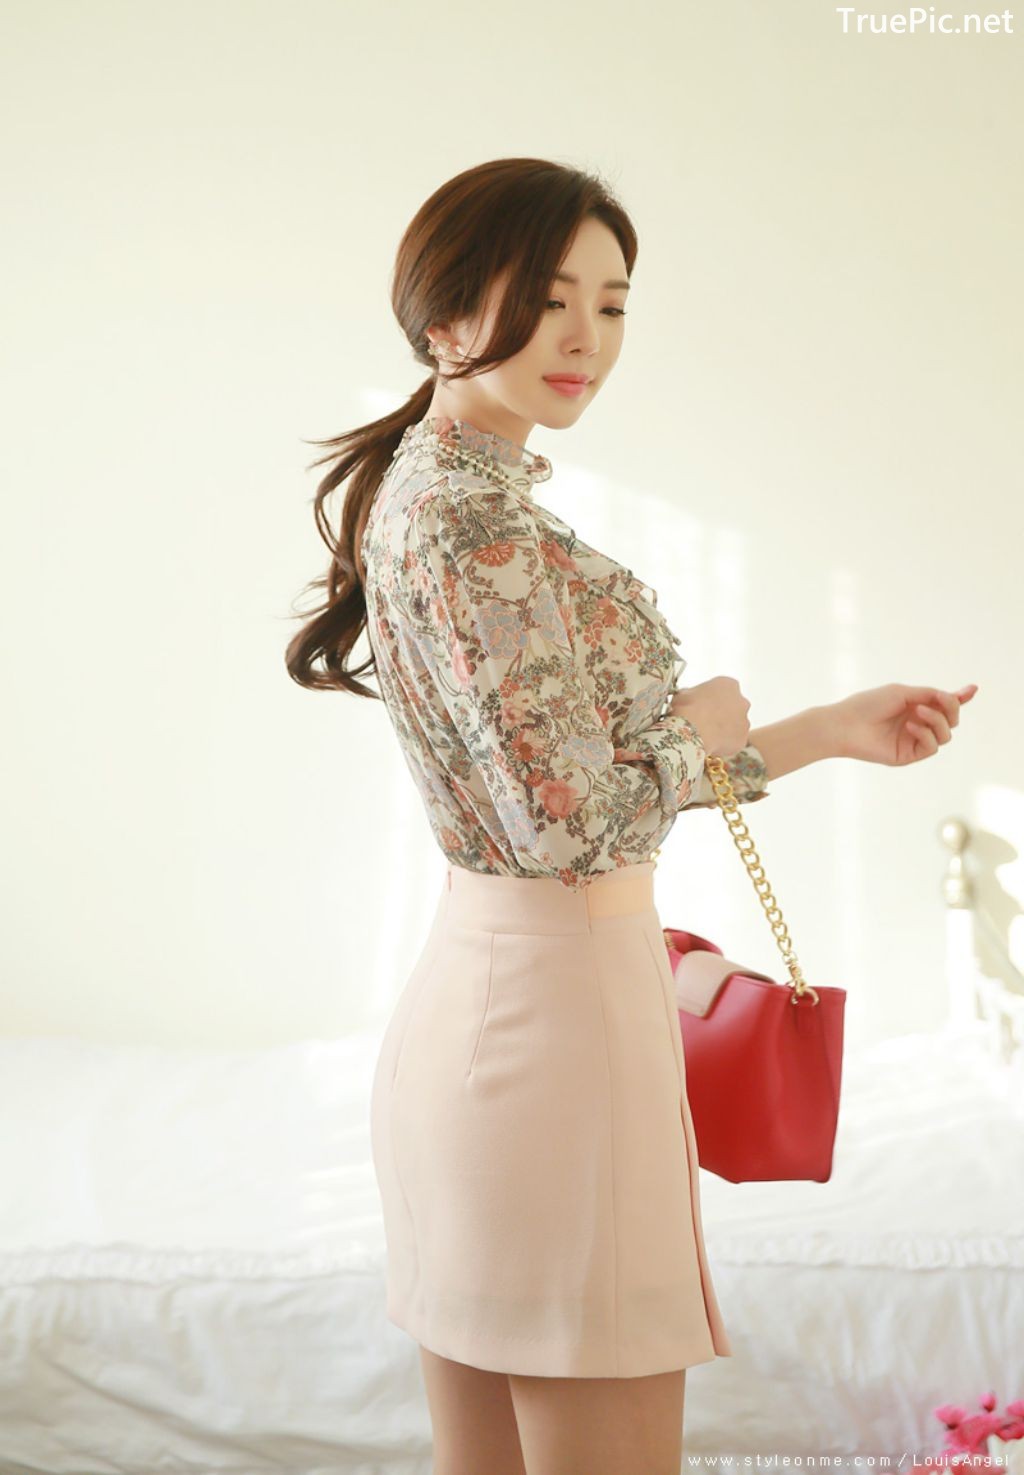 Image-Korean-Fashion-Model-Park-Da-Hyun-Office-Dress-Collection-TruePic.net- Picture-24